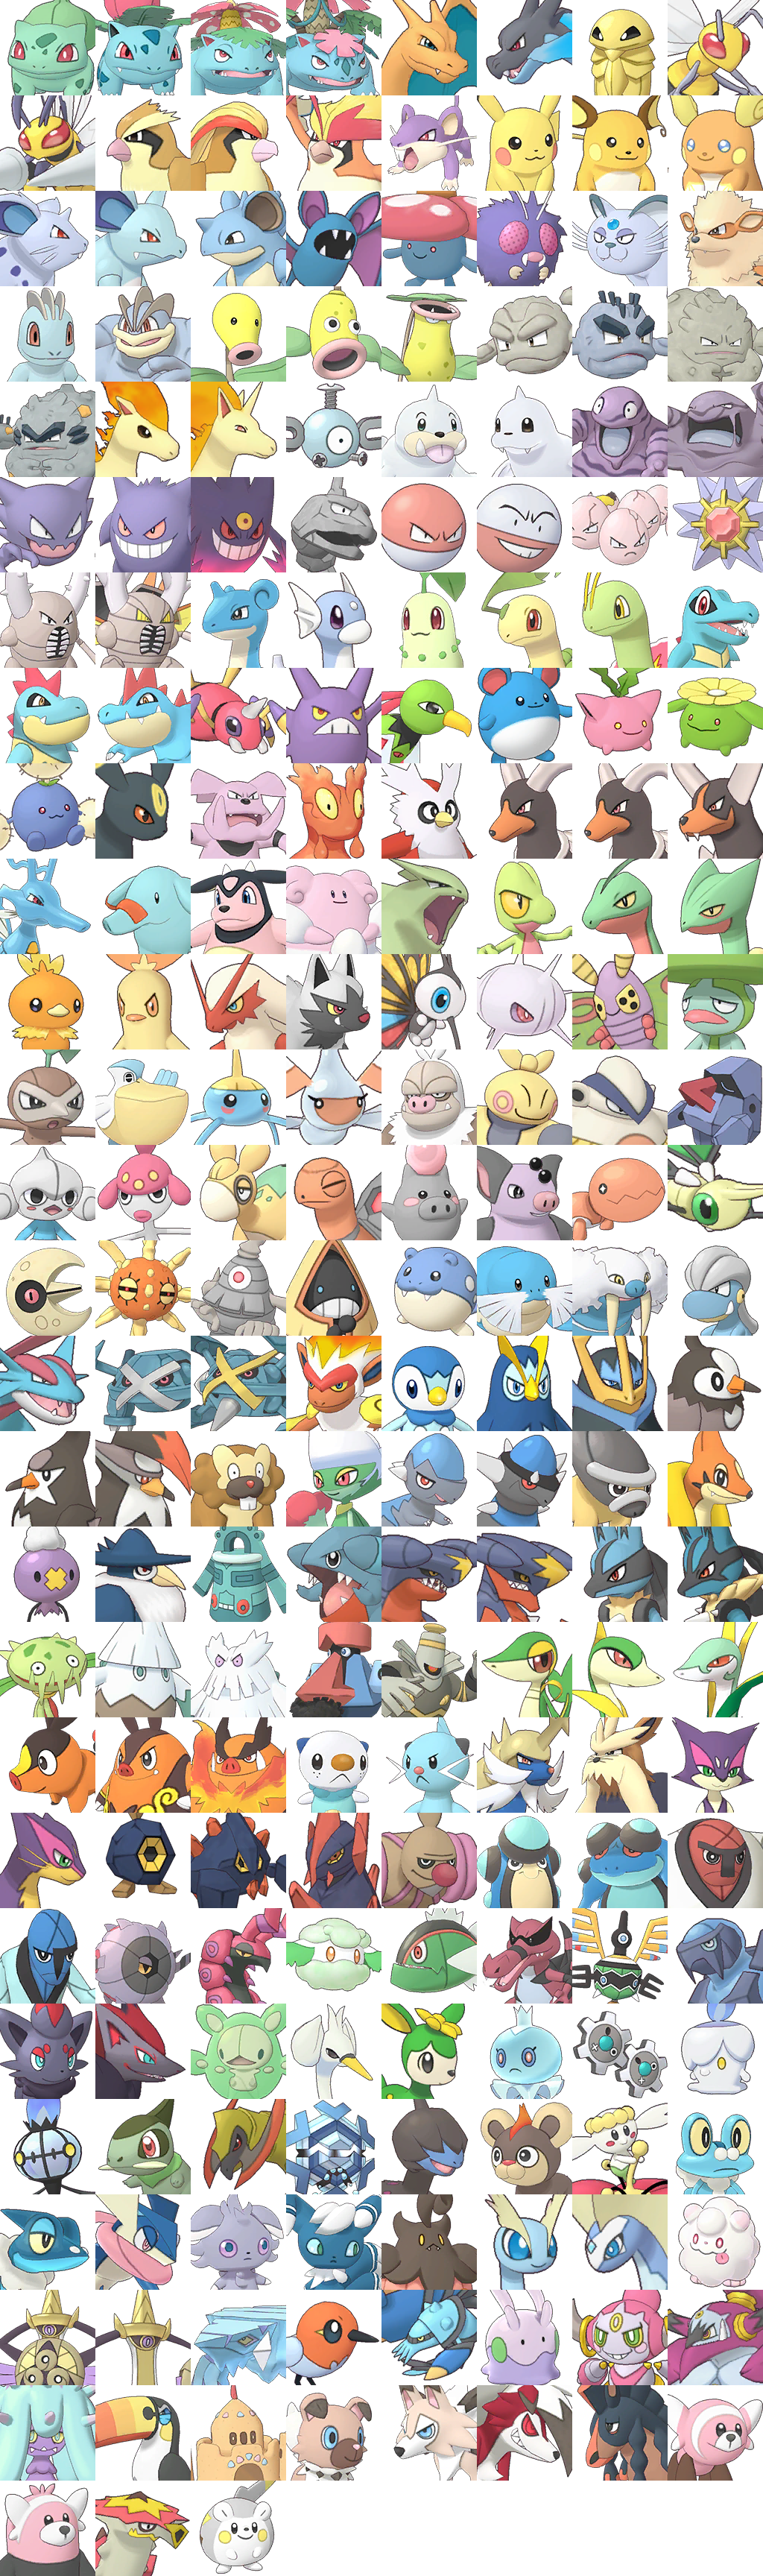 Pokémon Masters - Pokémon Icons (Small)